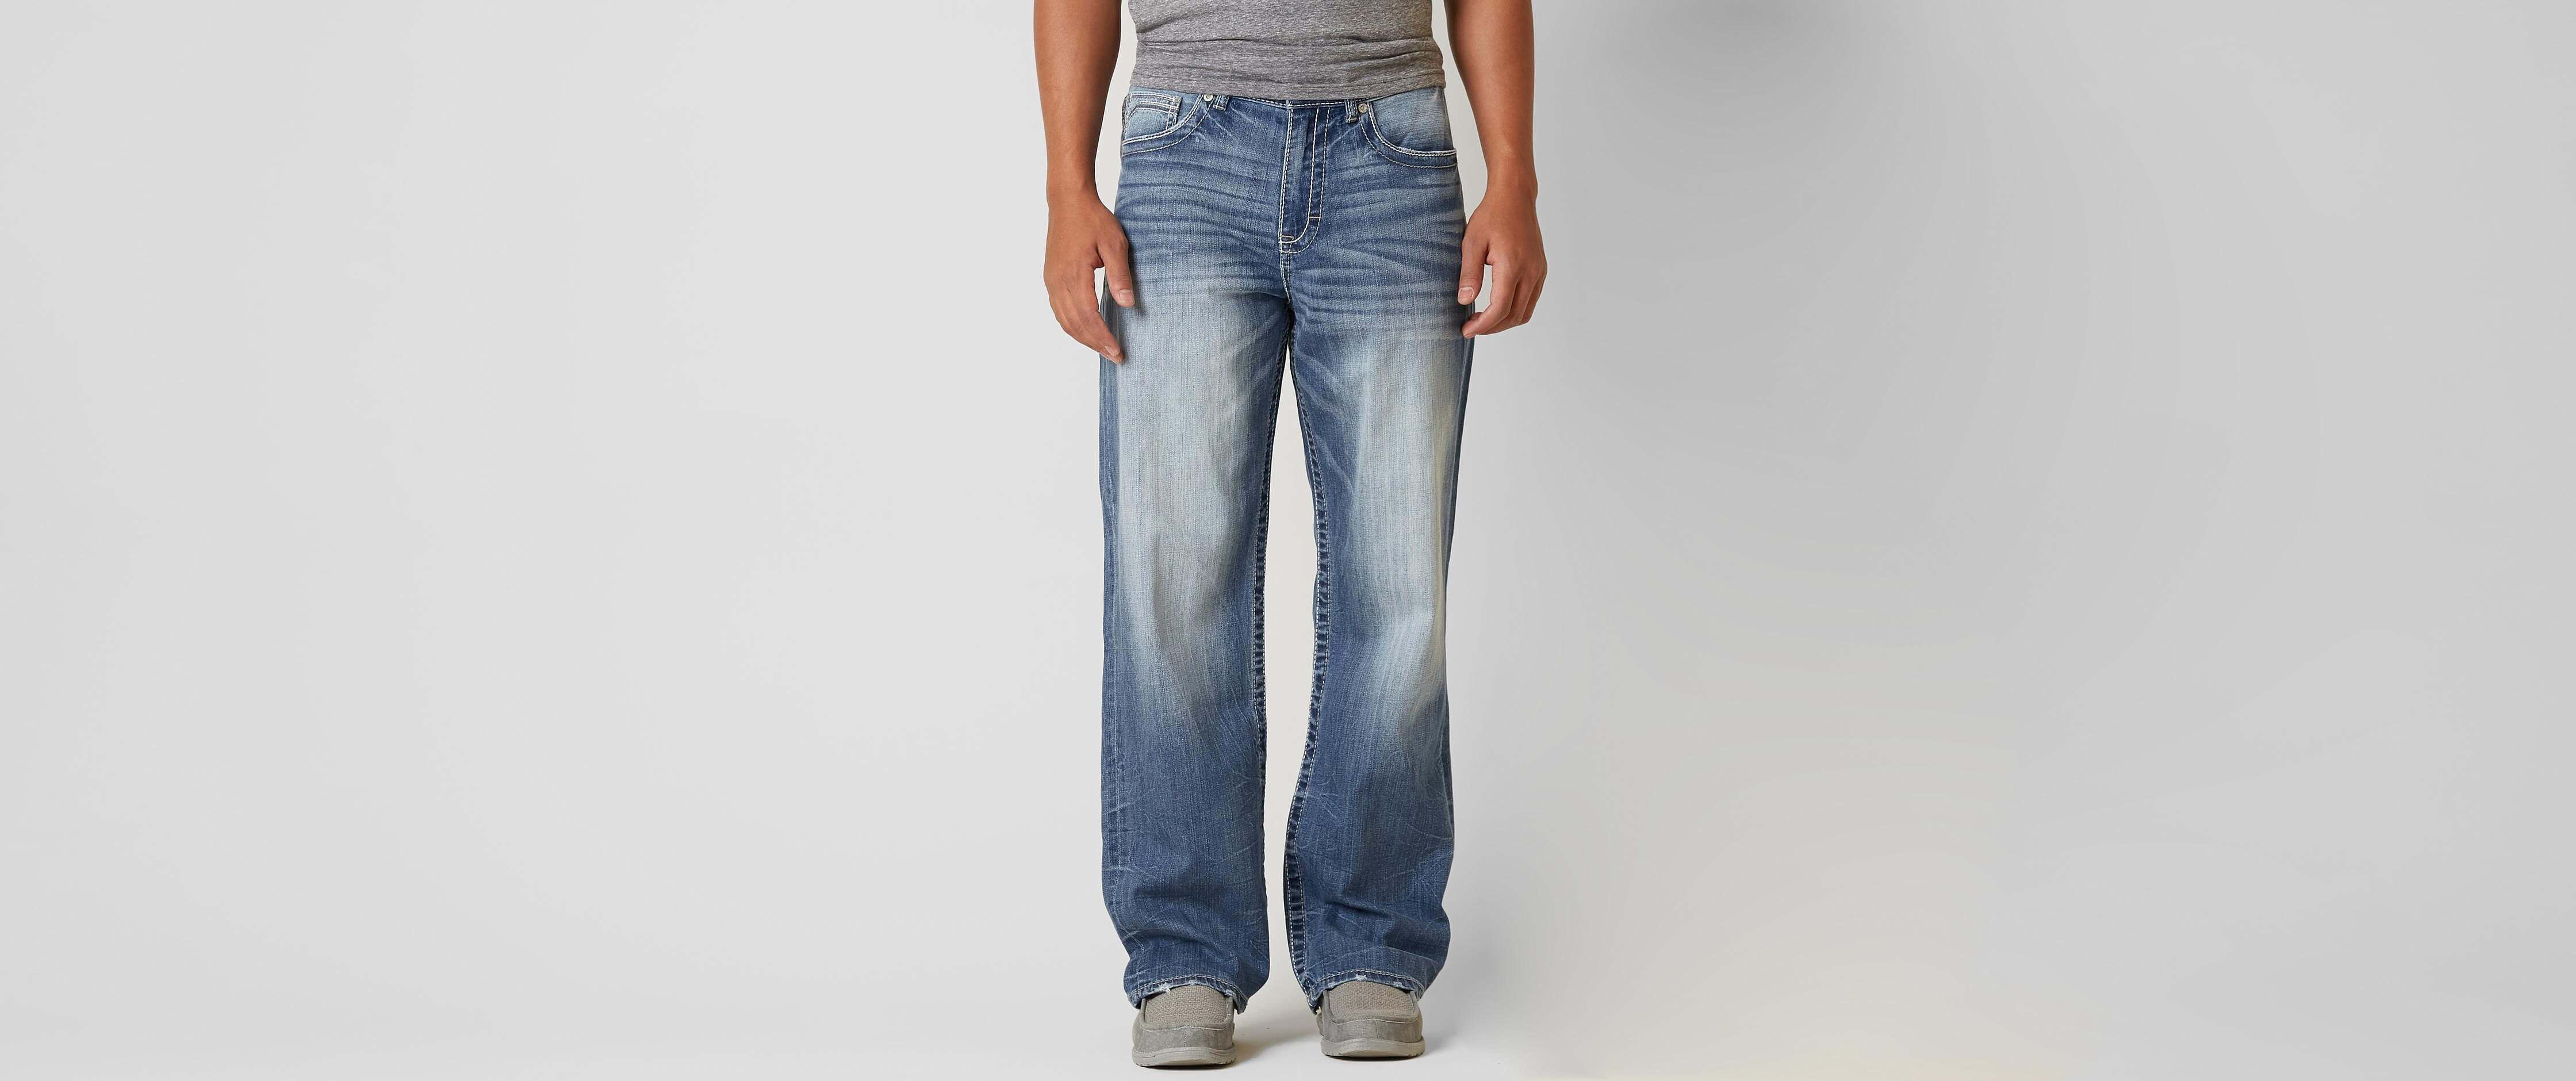 size 26 waist jeans